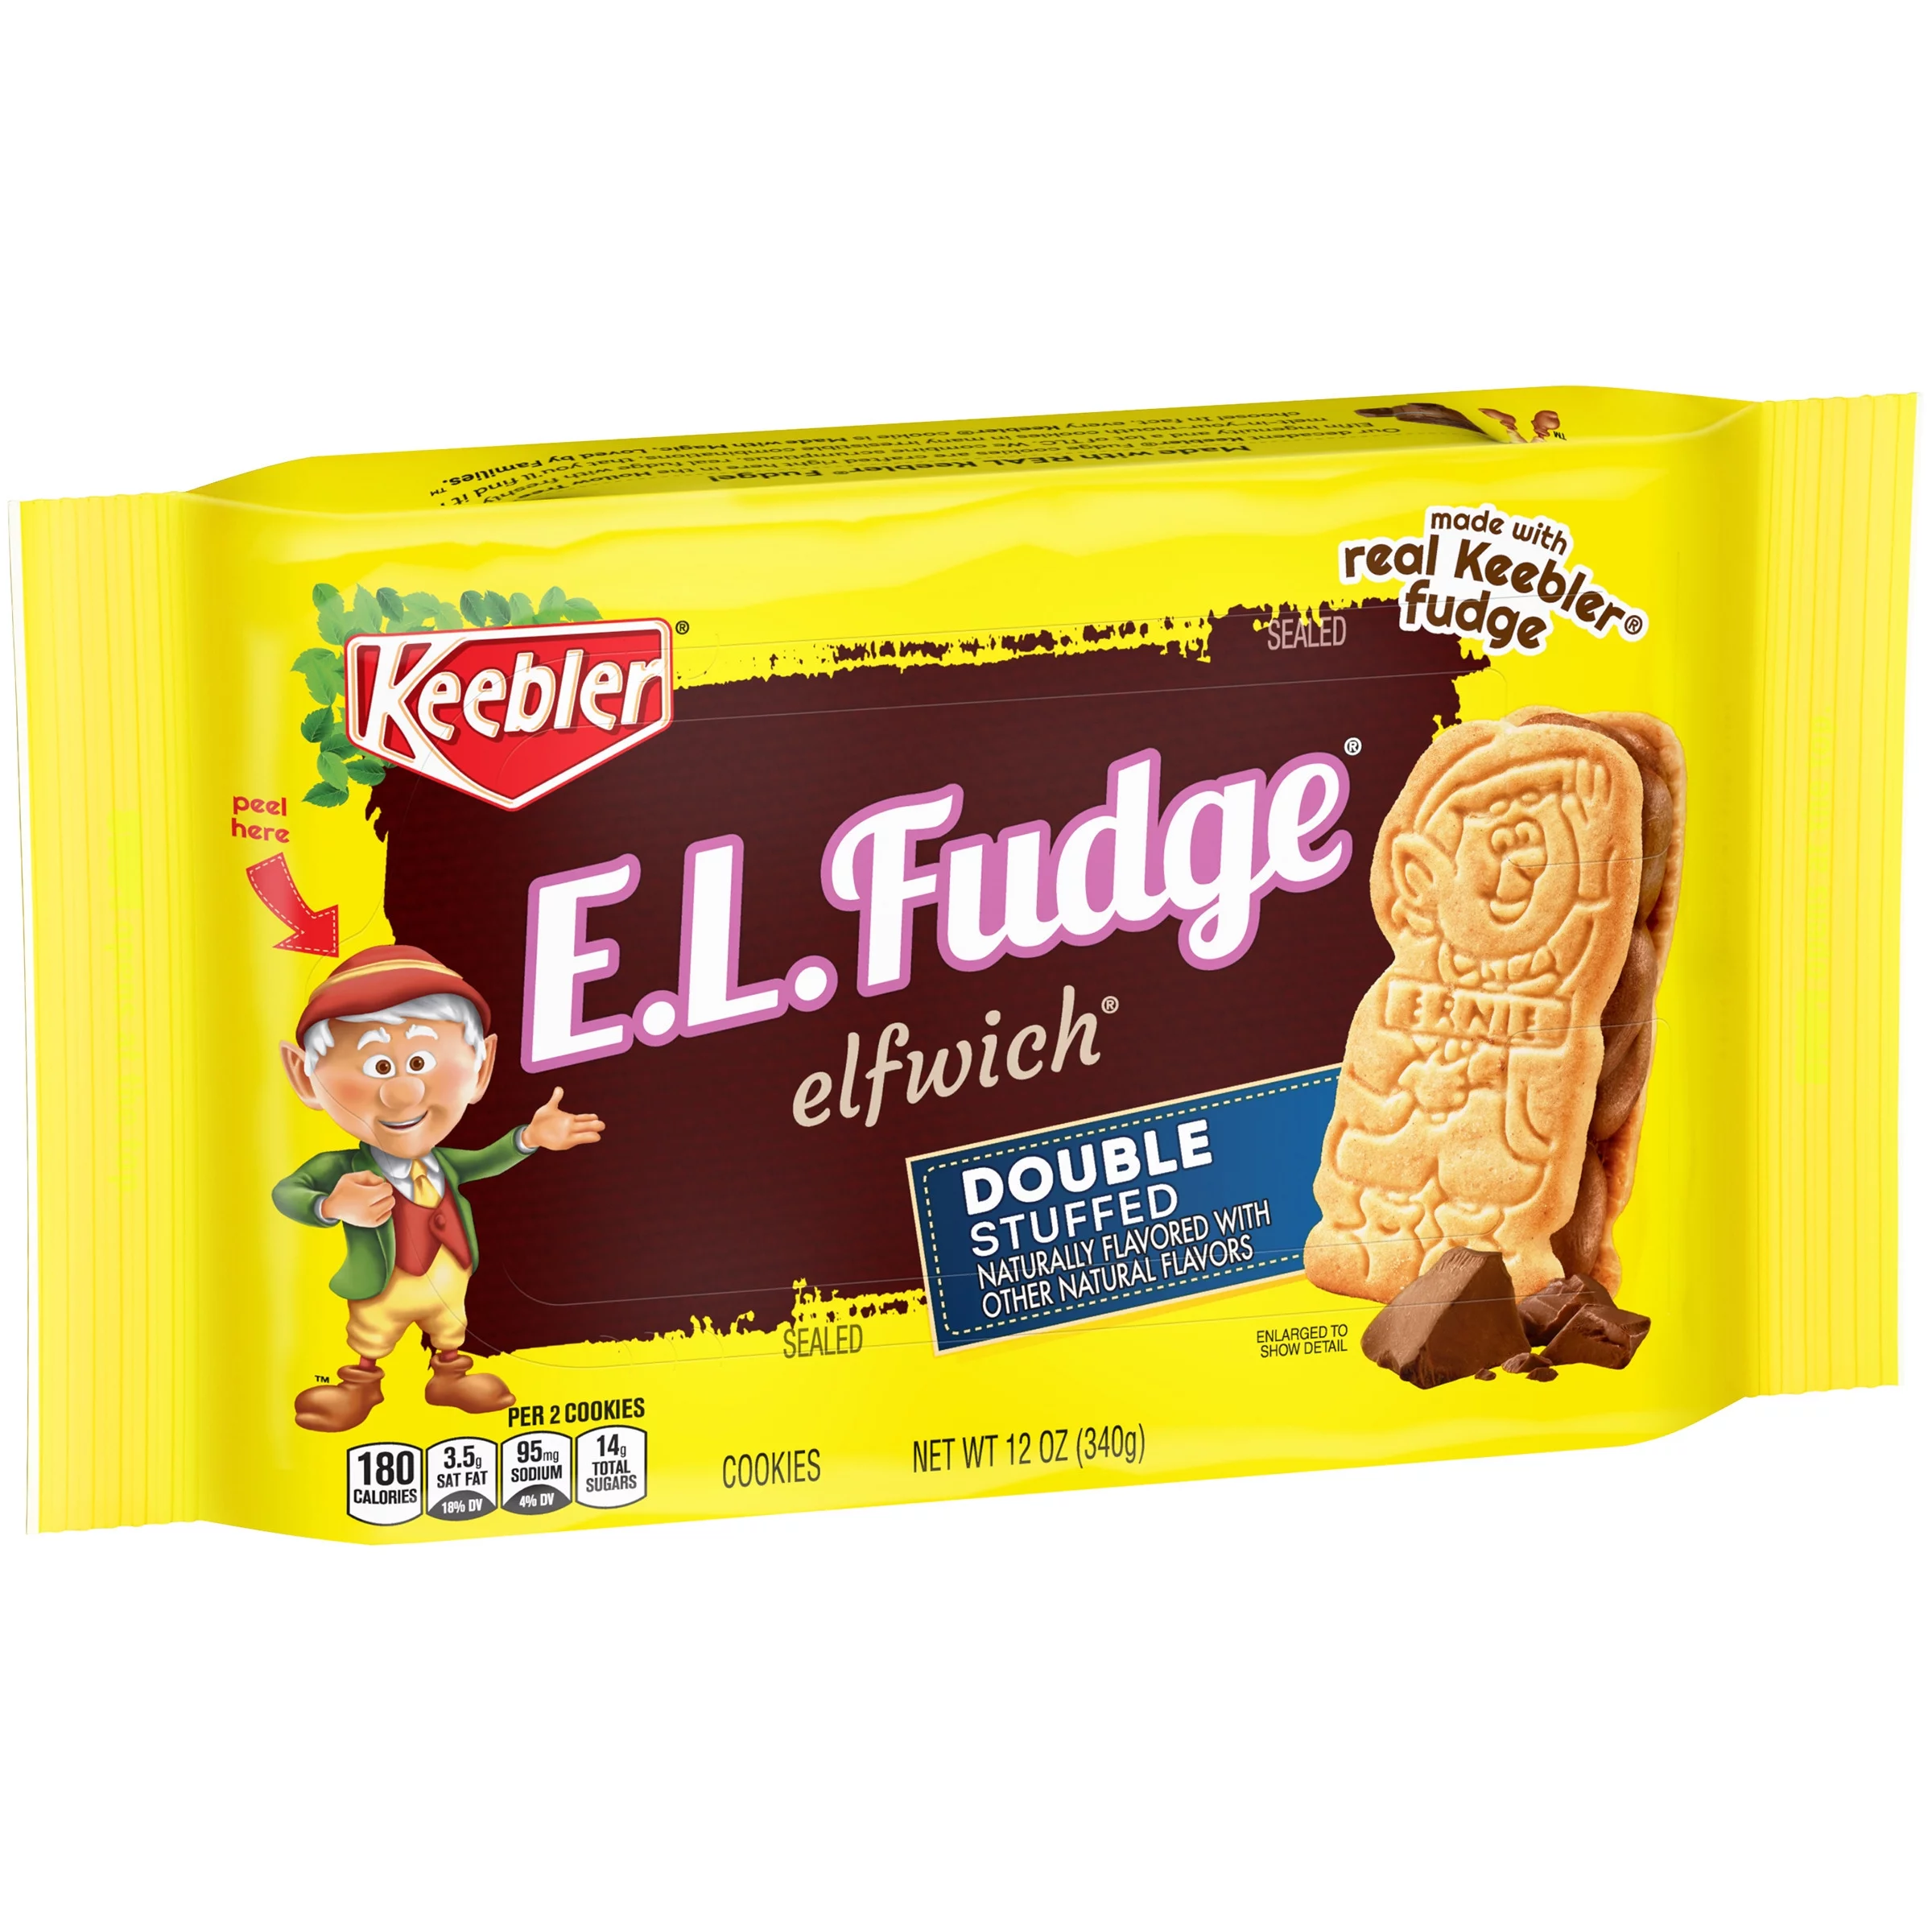 Keebler E.L.Fudge Elfwich Double Stuffed Cookies 12 oz